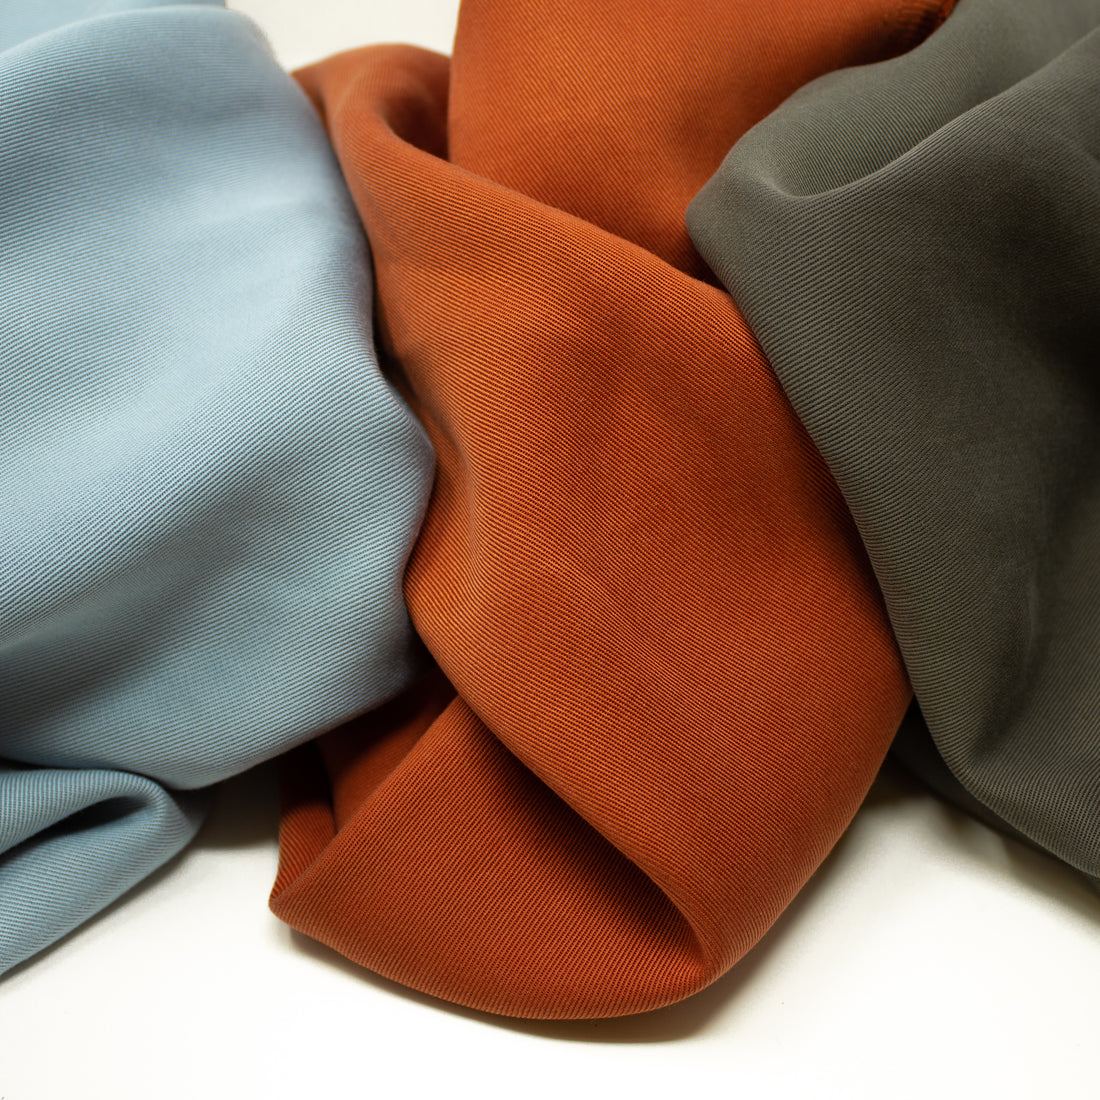 Our new Favourite All-Season Fabric :: Quadra Lyocell Twill!